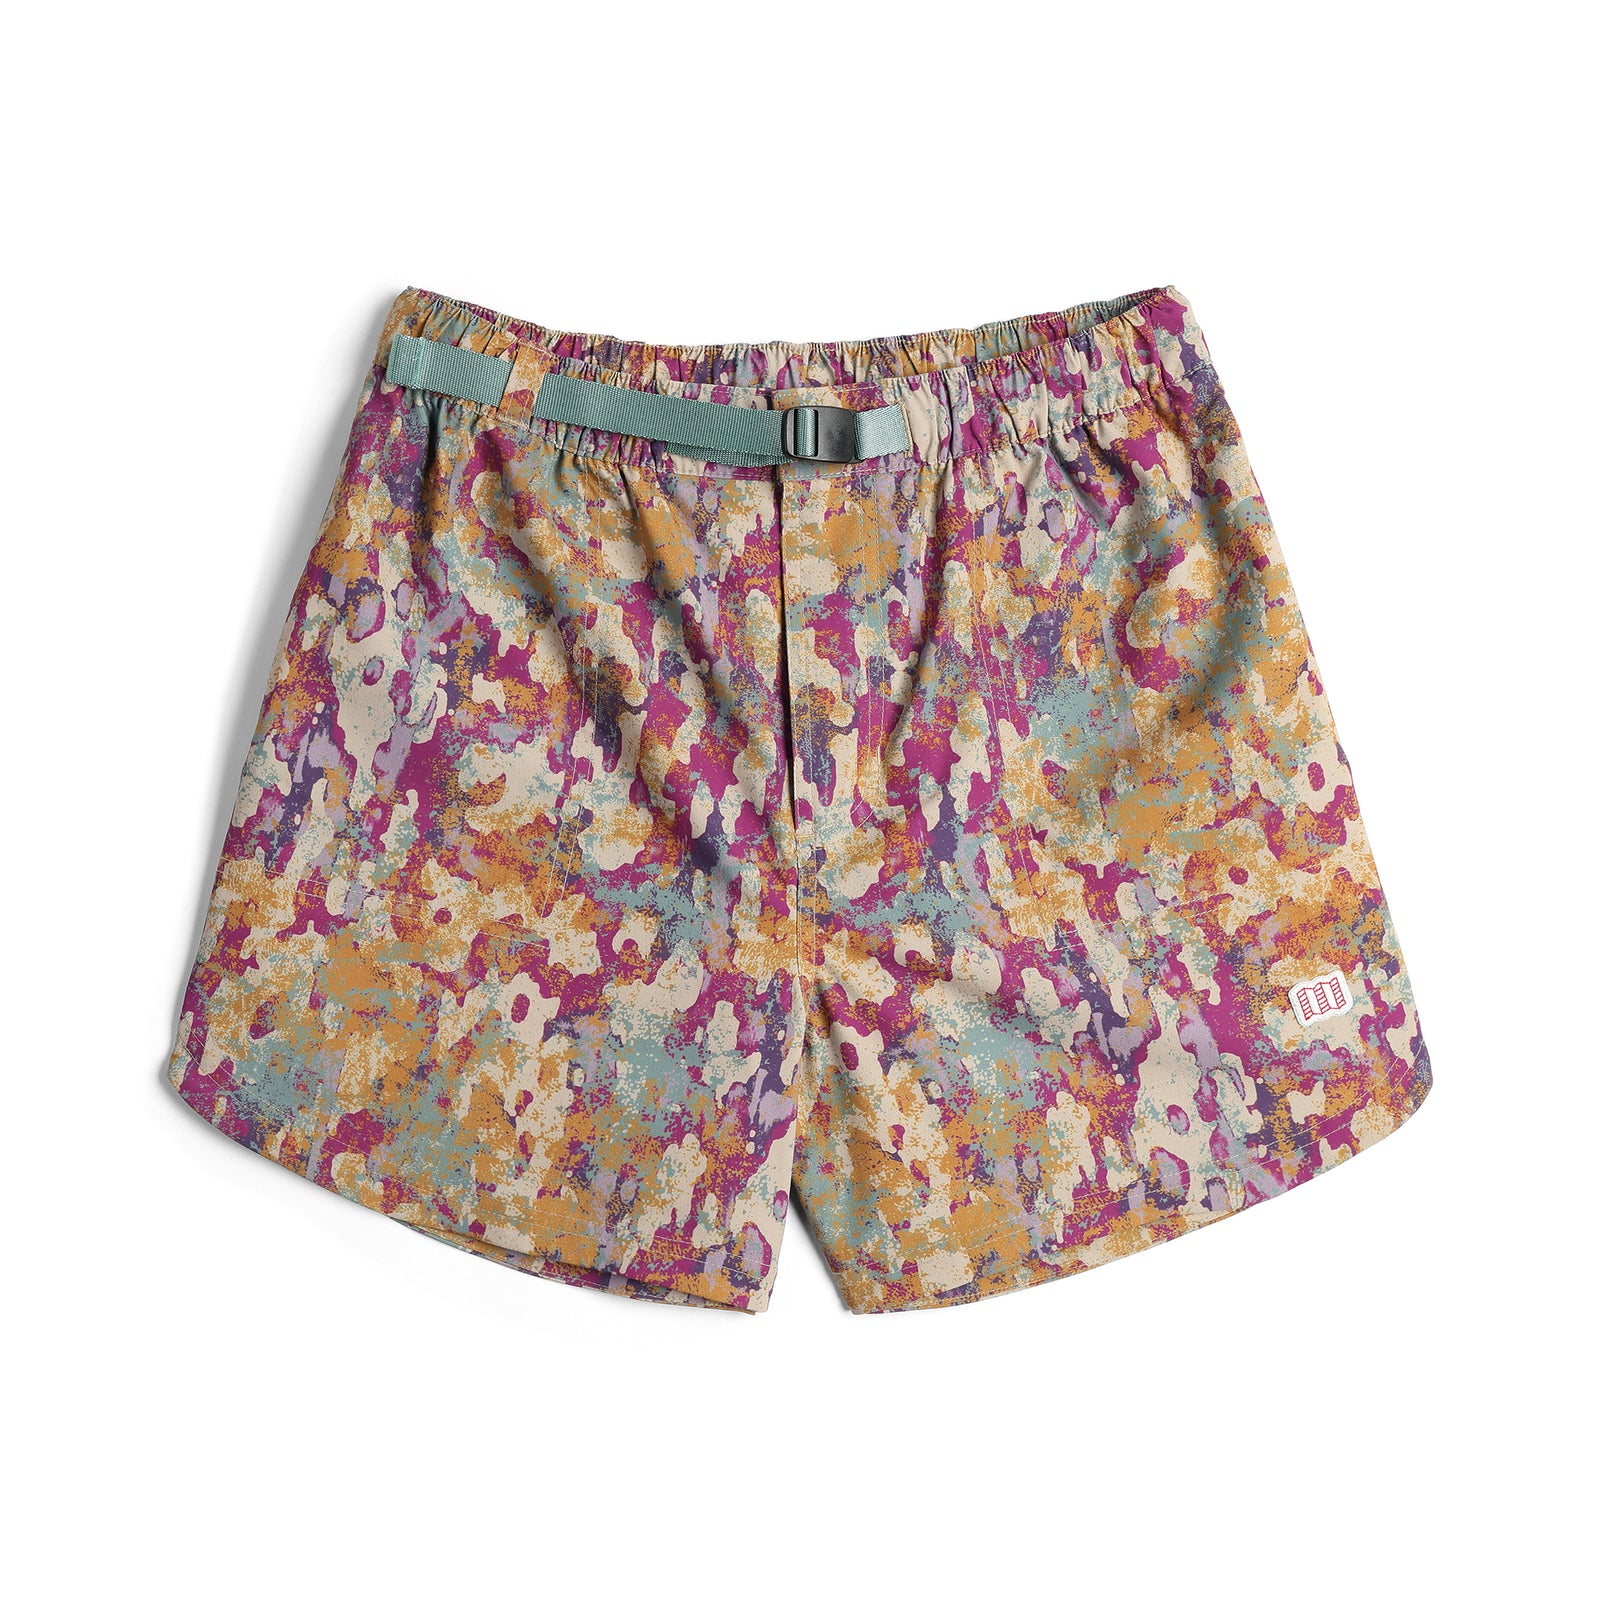 Front View of Topo Designs River Shorts - Women's in "Khaki Celestial"